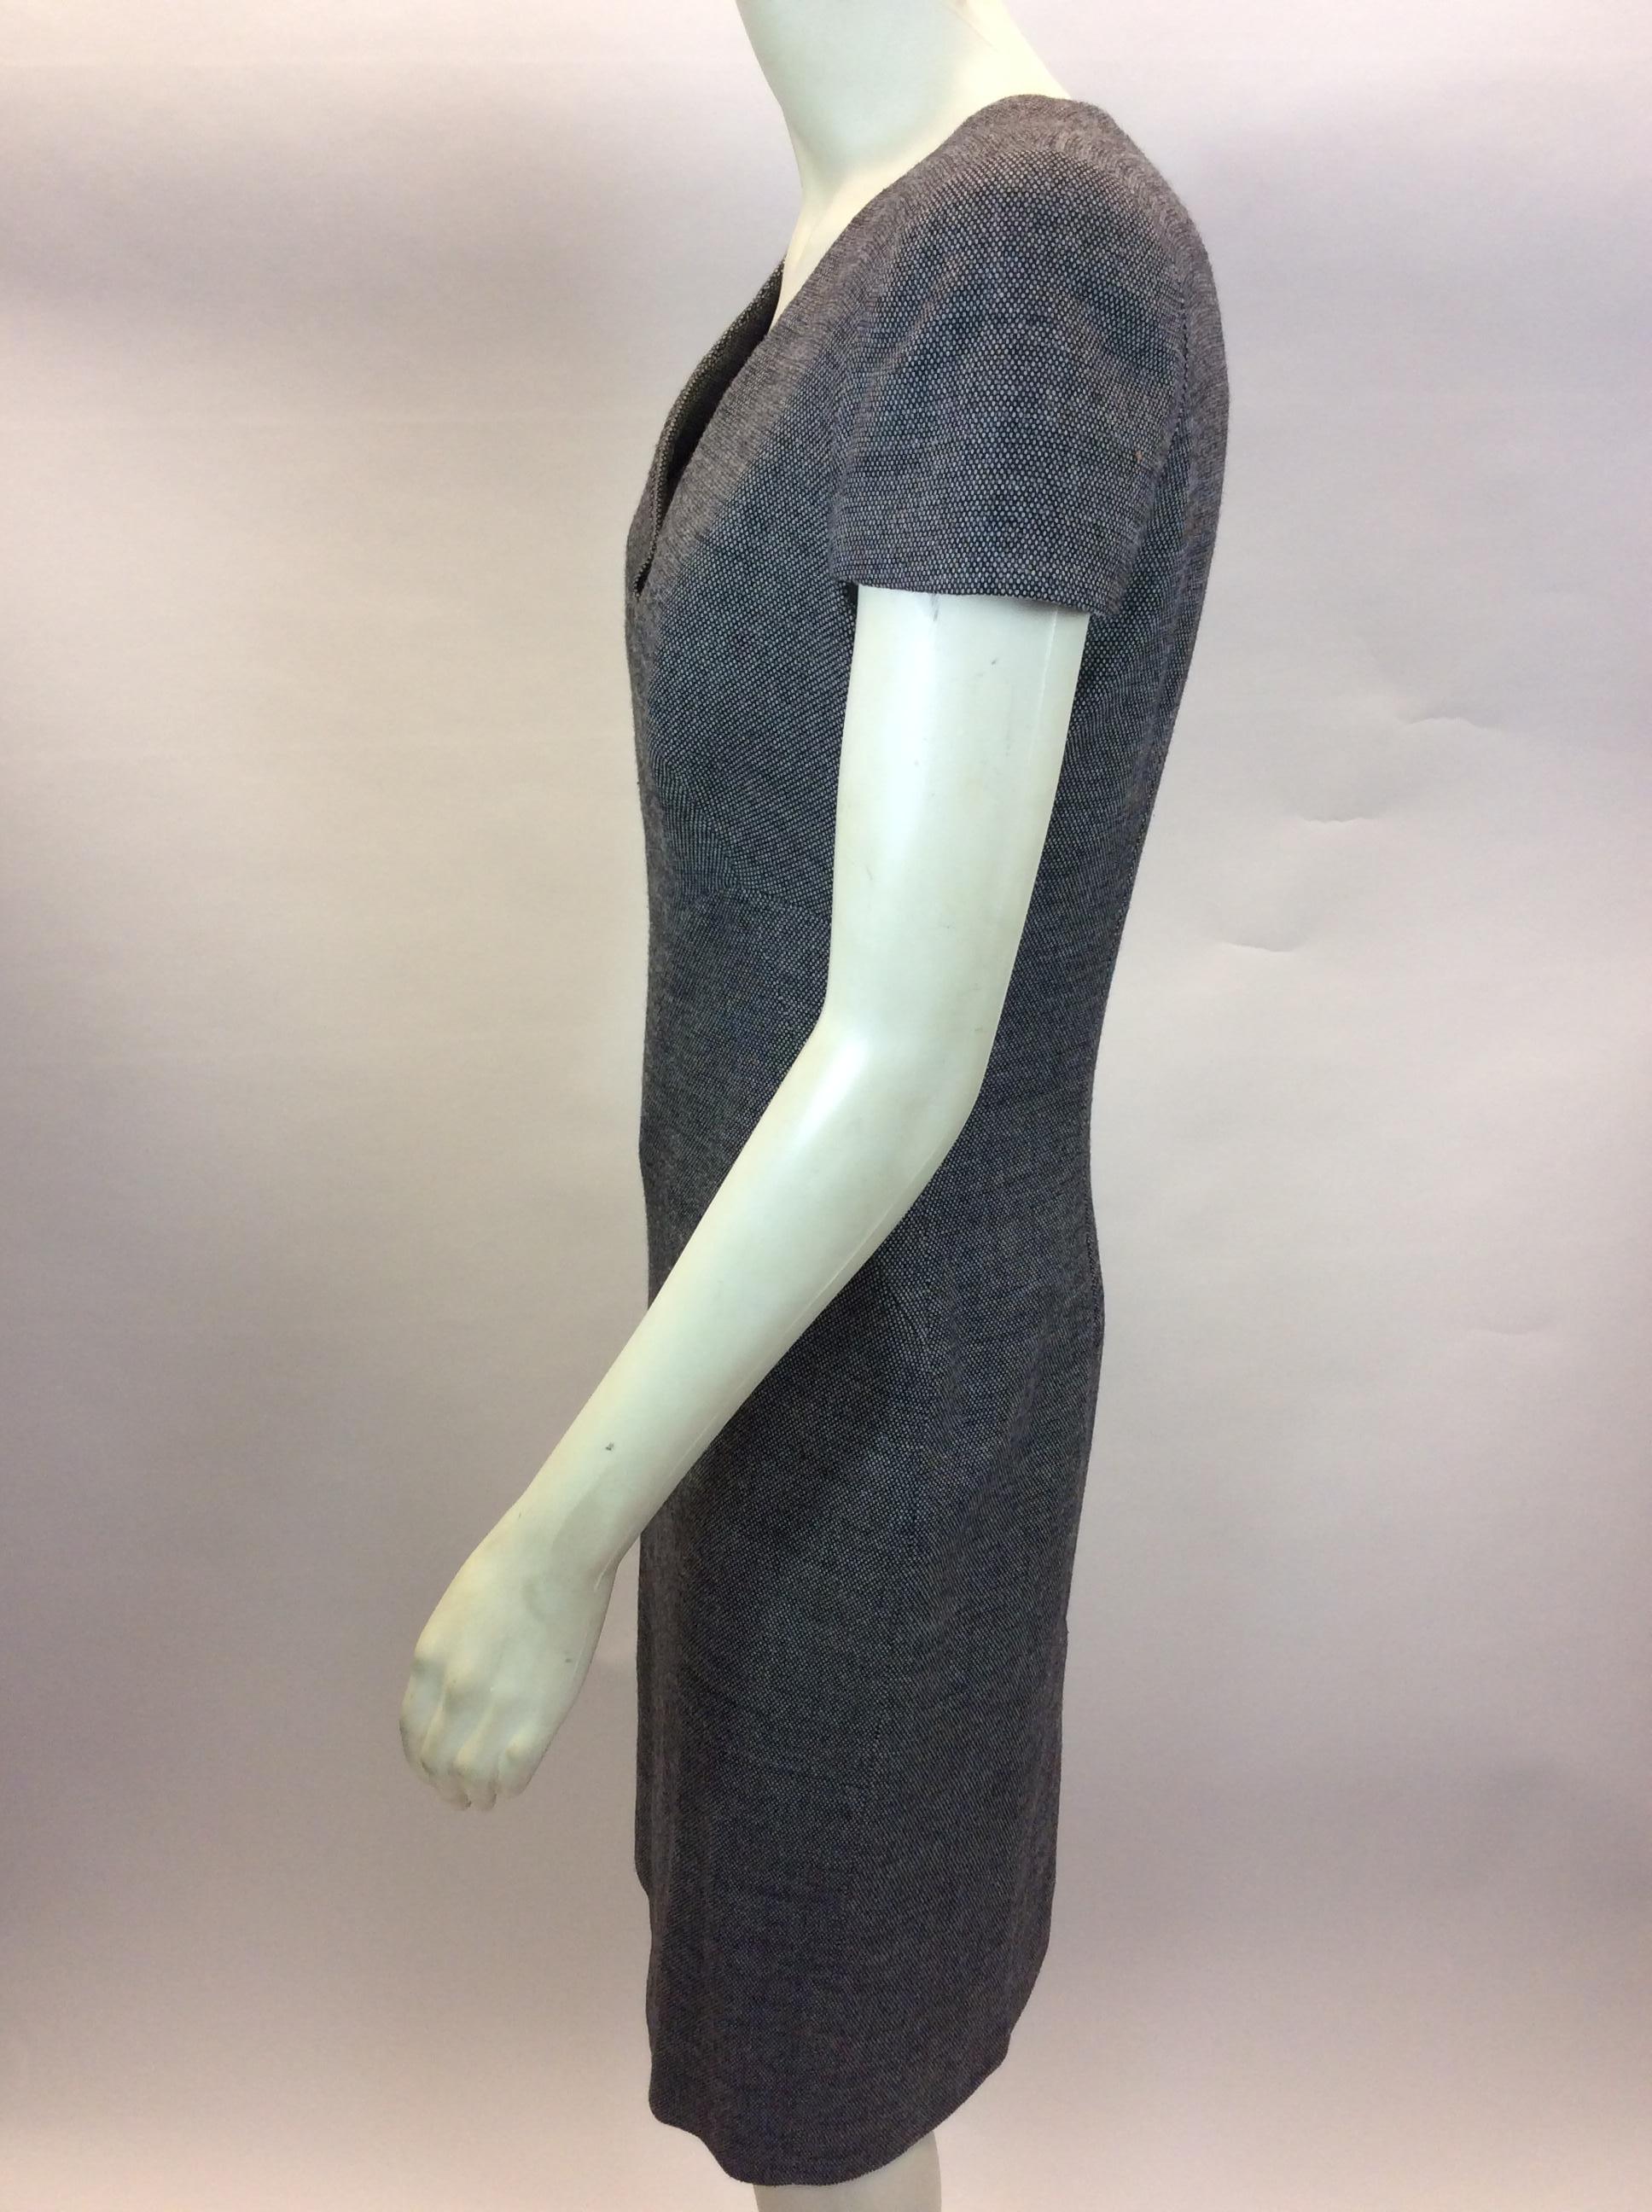 Alexander McQueen Grey Tweed Dress
$299
Made in Italy
97% Wool, 3% Elastane
Size 42
Length 39